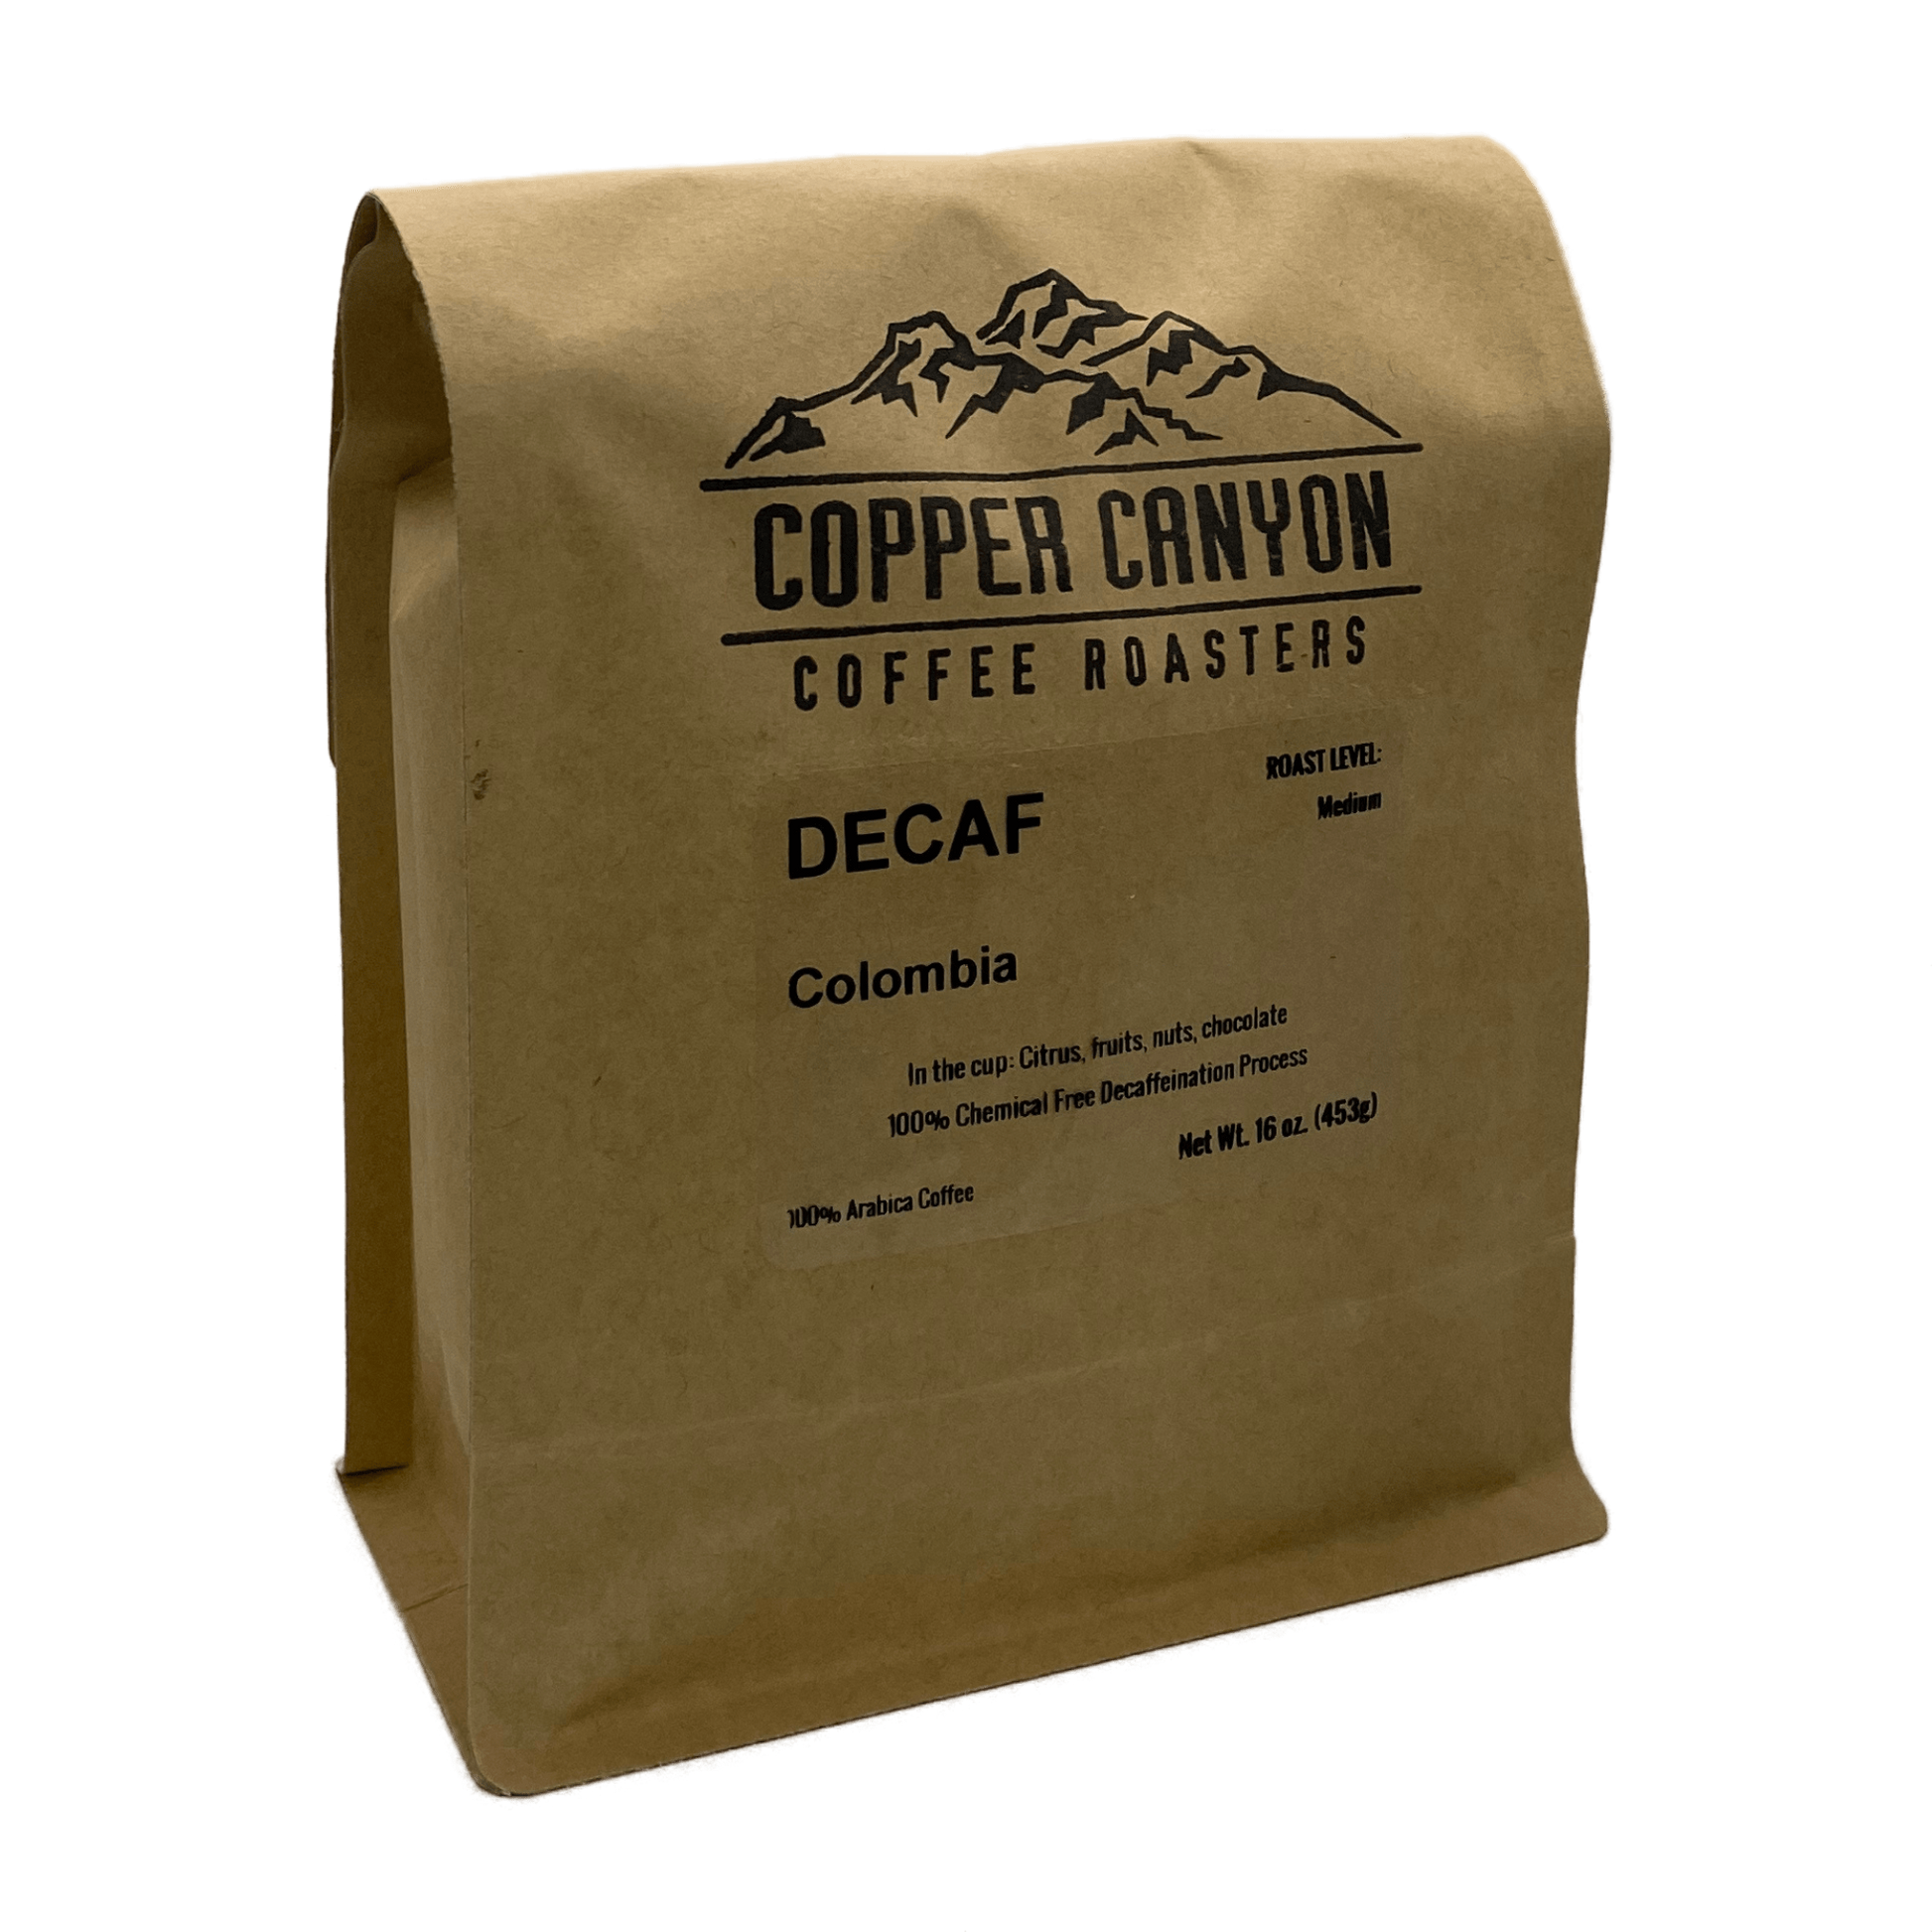 16 oz bag of Decaf Colombia, single origin, medium roast coffee